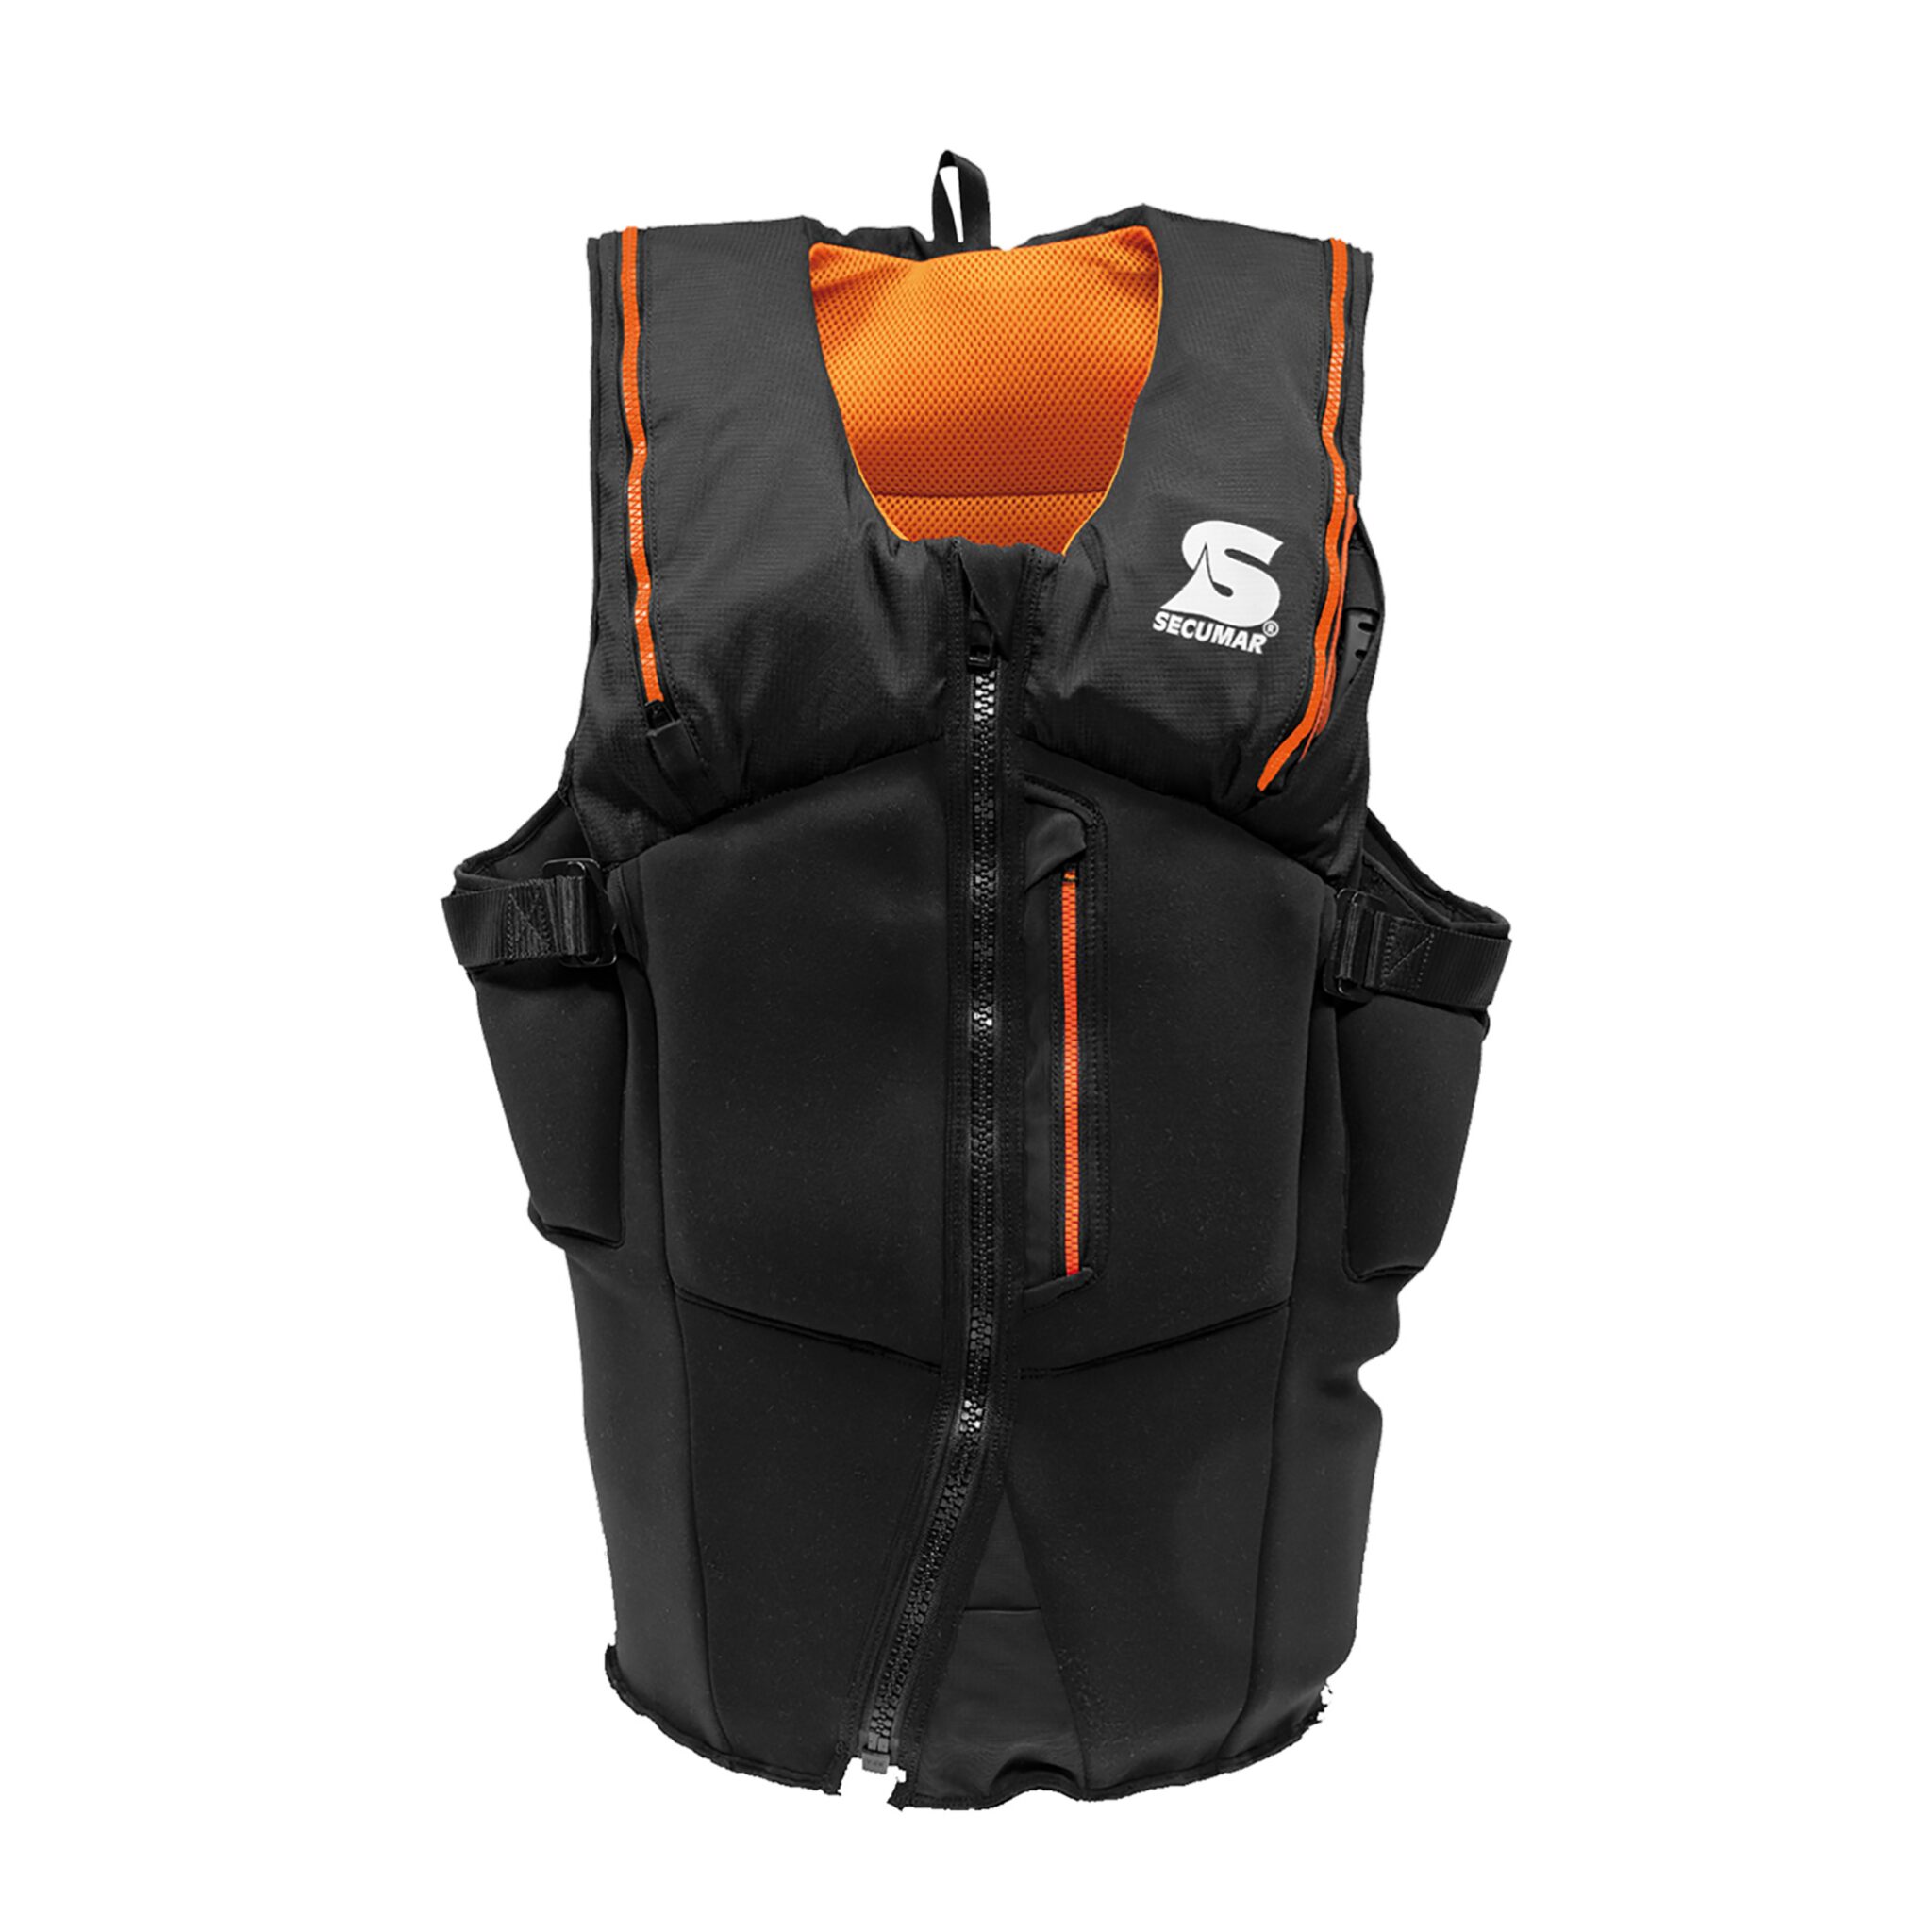 Secumar life jacket FURIO with impact protection